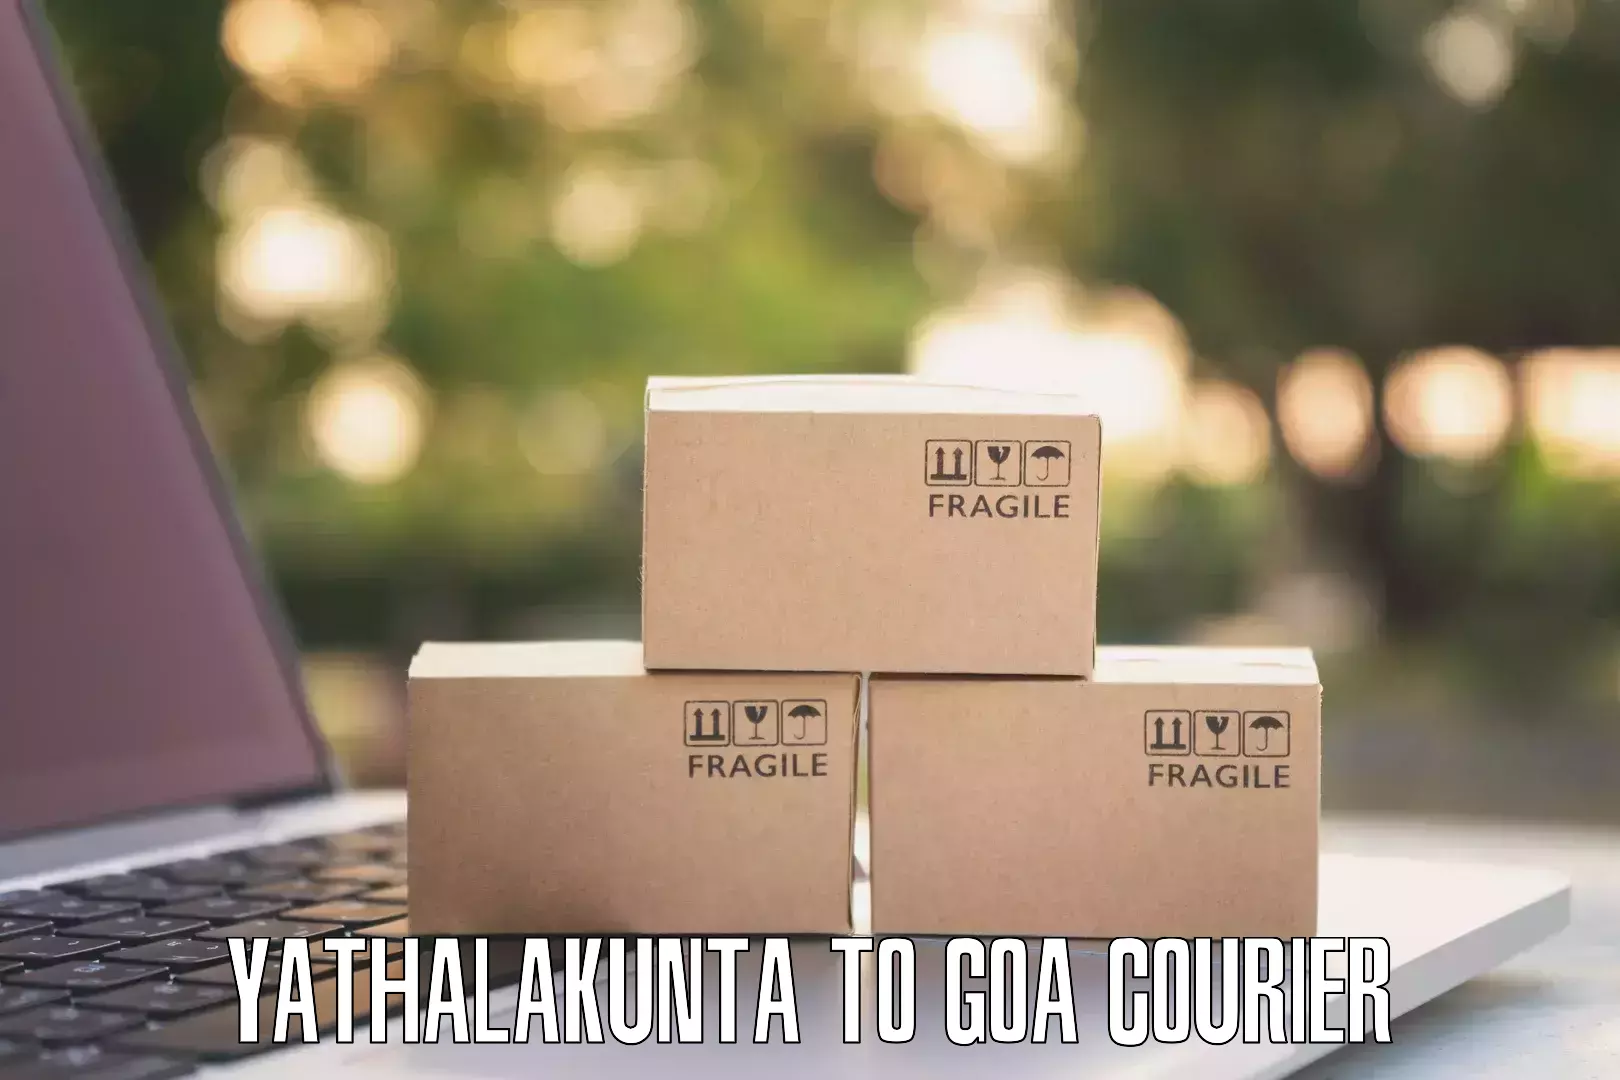 Easy return solutions Yathalakunta to Goa